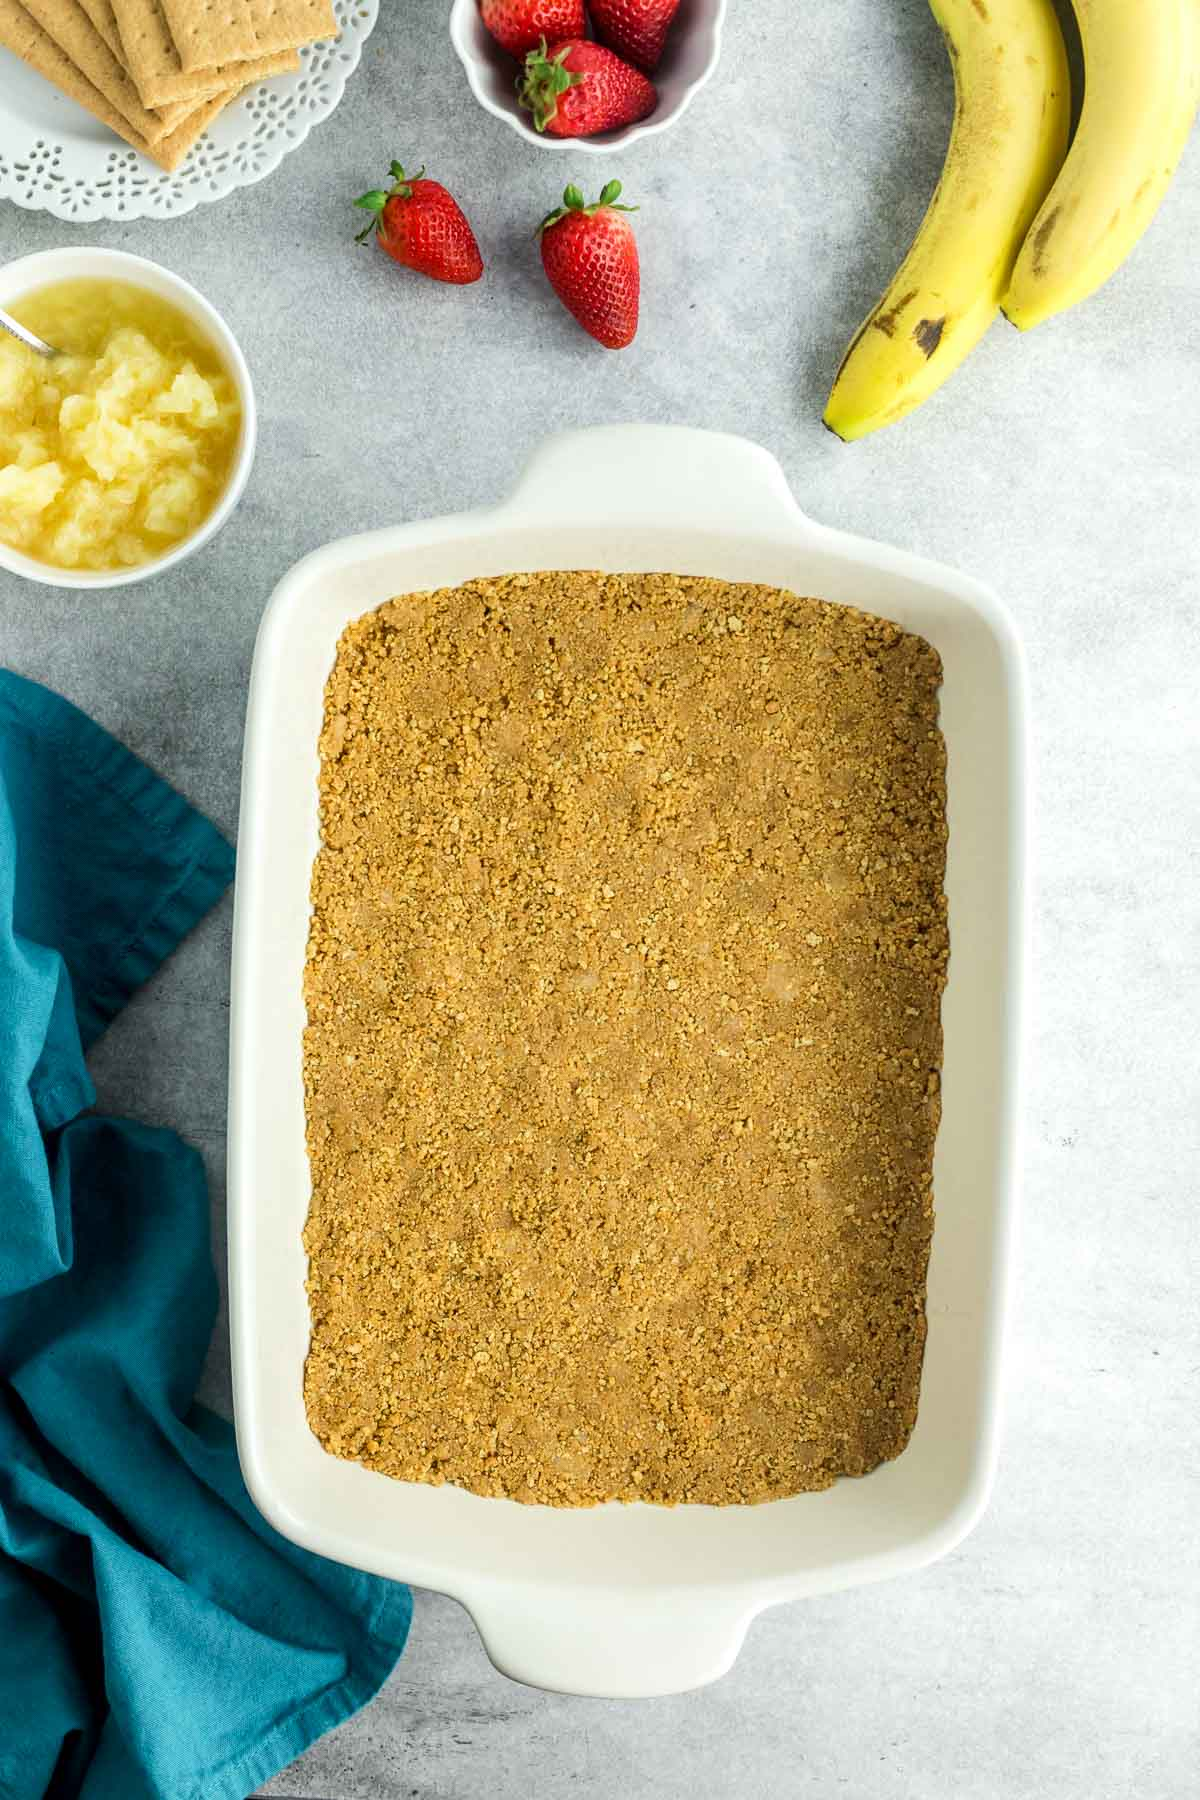 graham cracker crust pressed into bottom of 9x13 pan